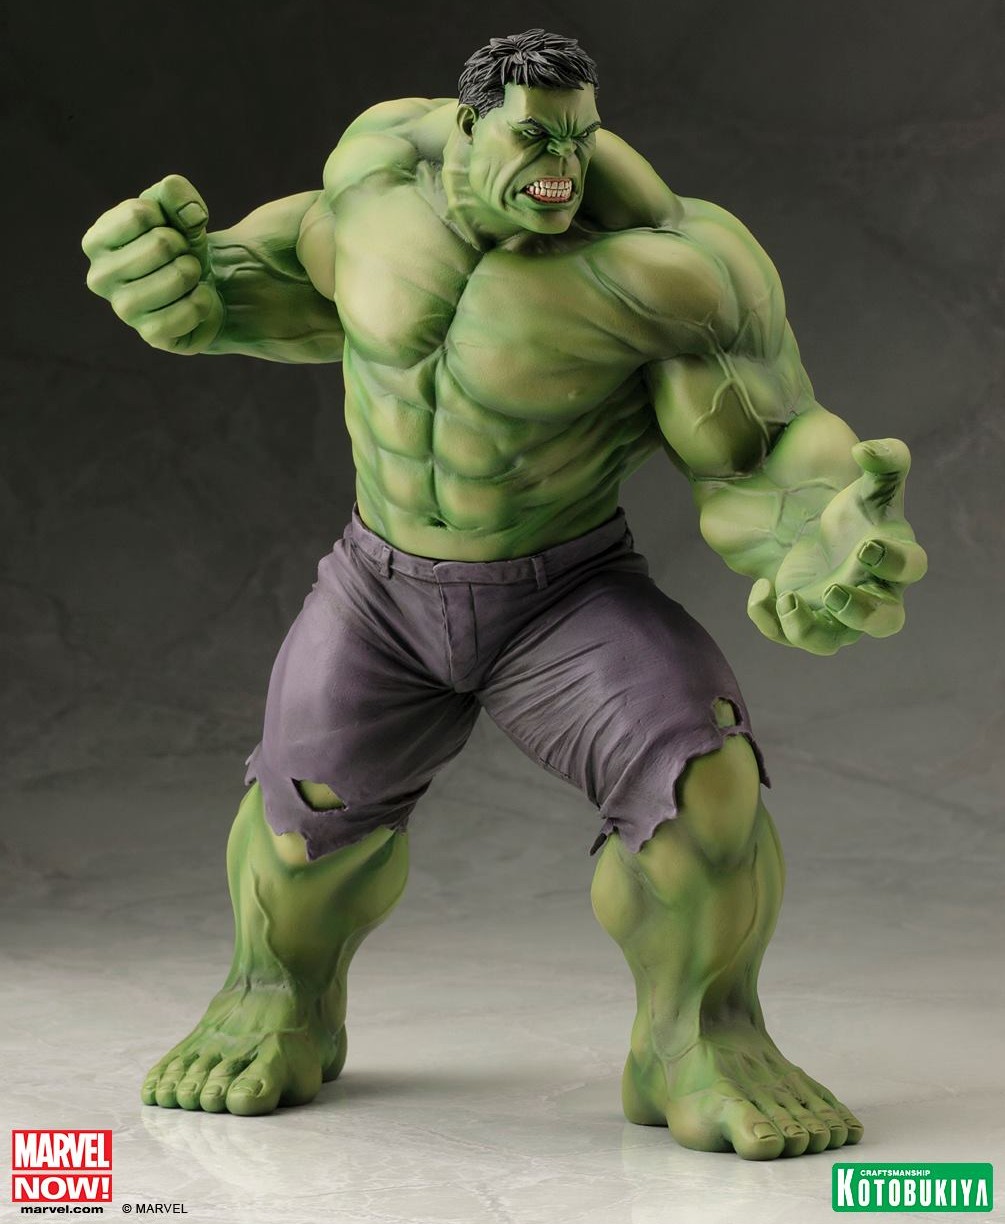 Kotobukiya Hulk Avengers Now ARTFX+ Statue Coming in March 2014! - Marvel  Toy News